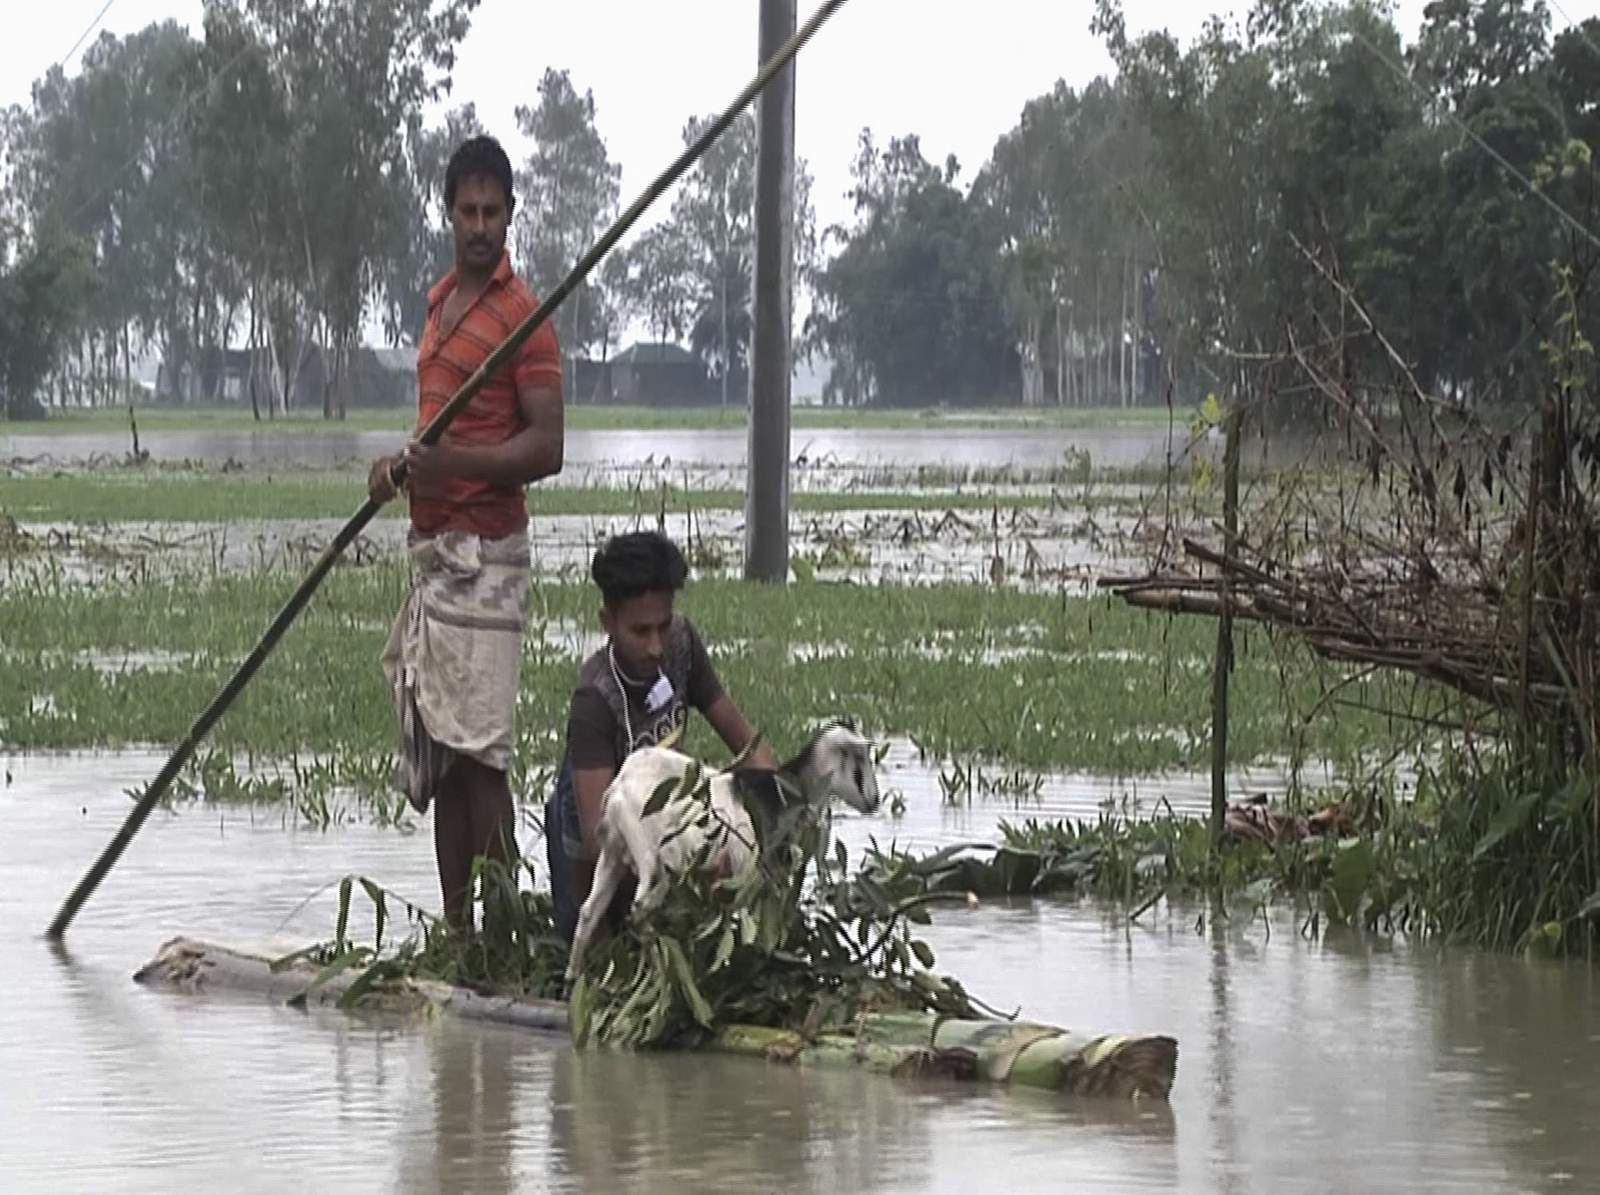 Over 1 million marooned in Bangladesh as floods worsen